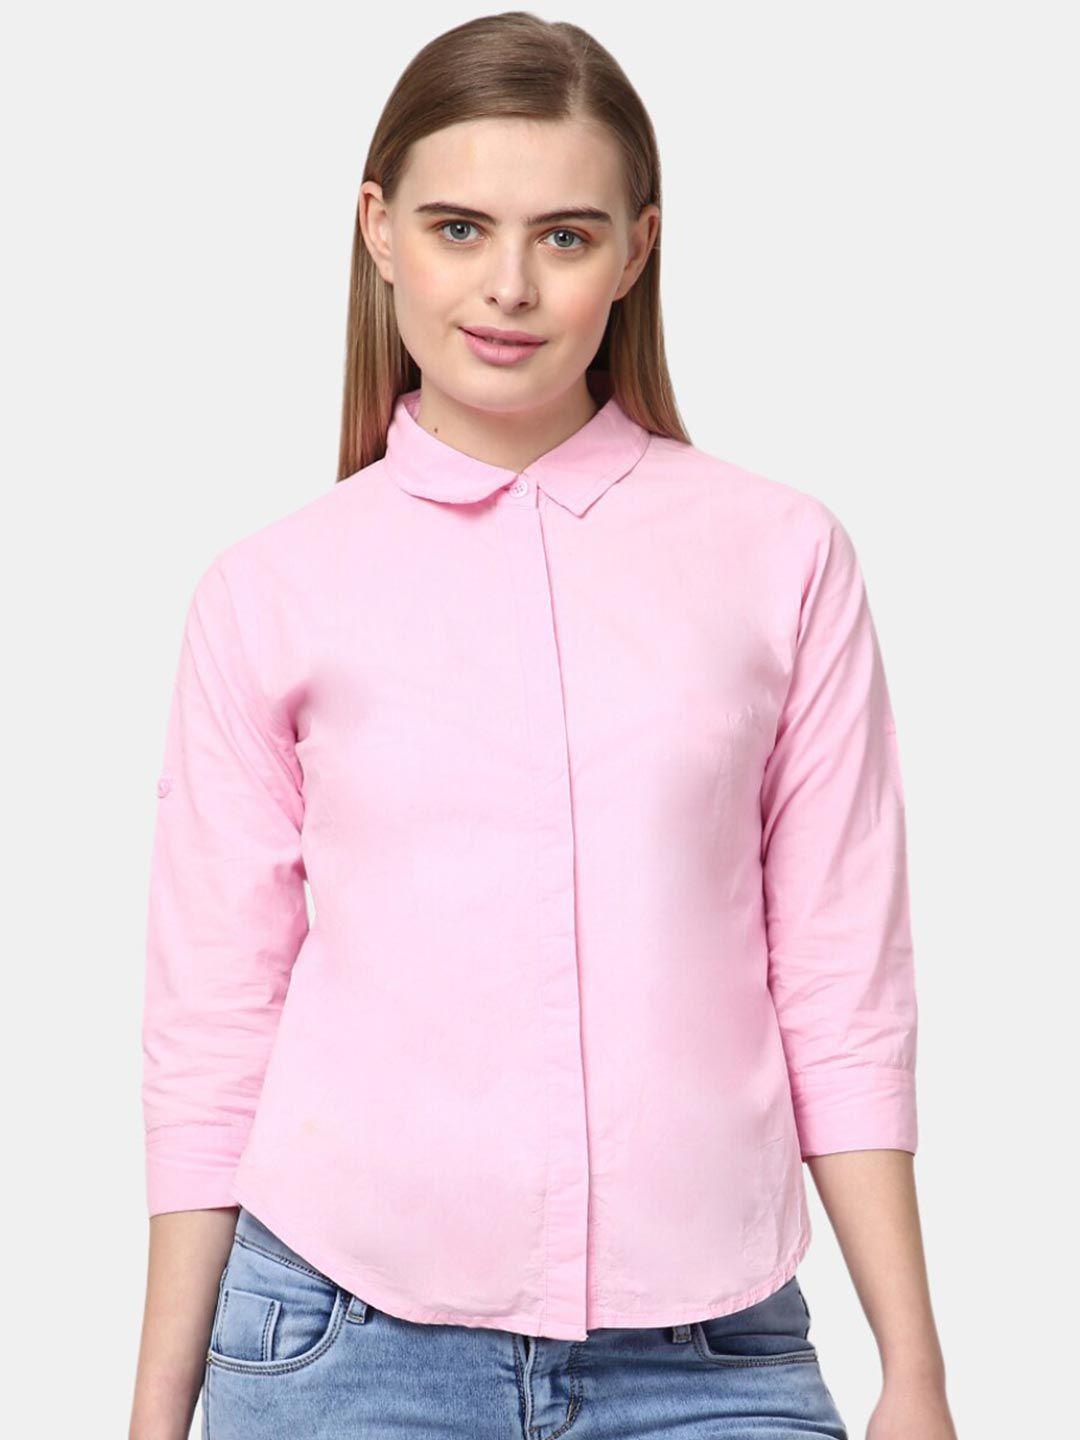 v-mart women pink classic casual shirt